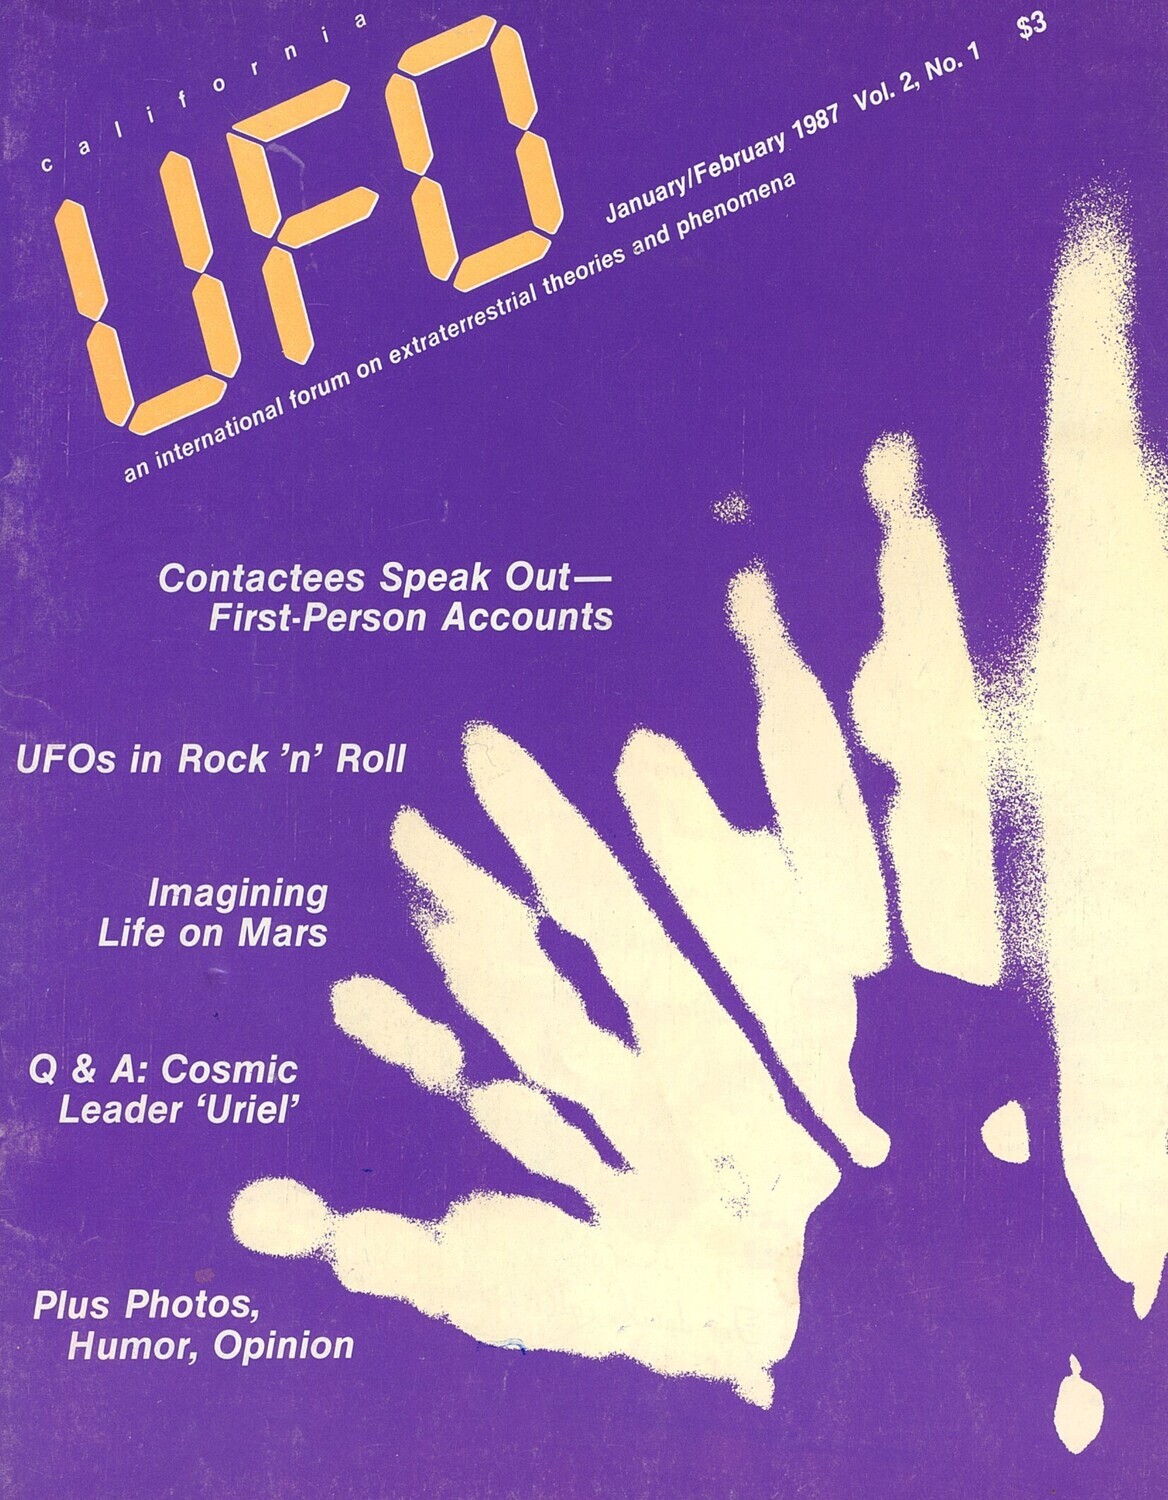 California UFO Magazine Volume 2 Issue 1 1987